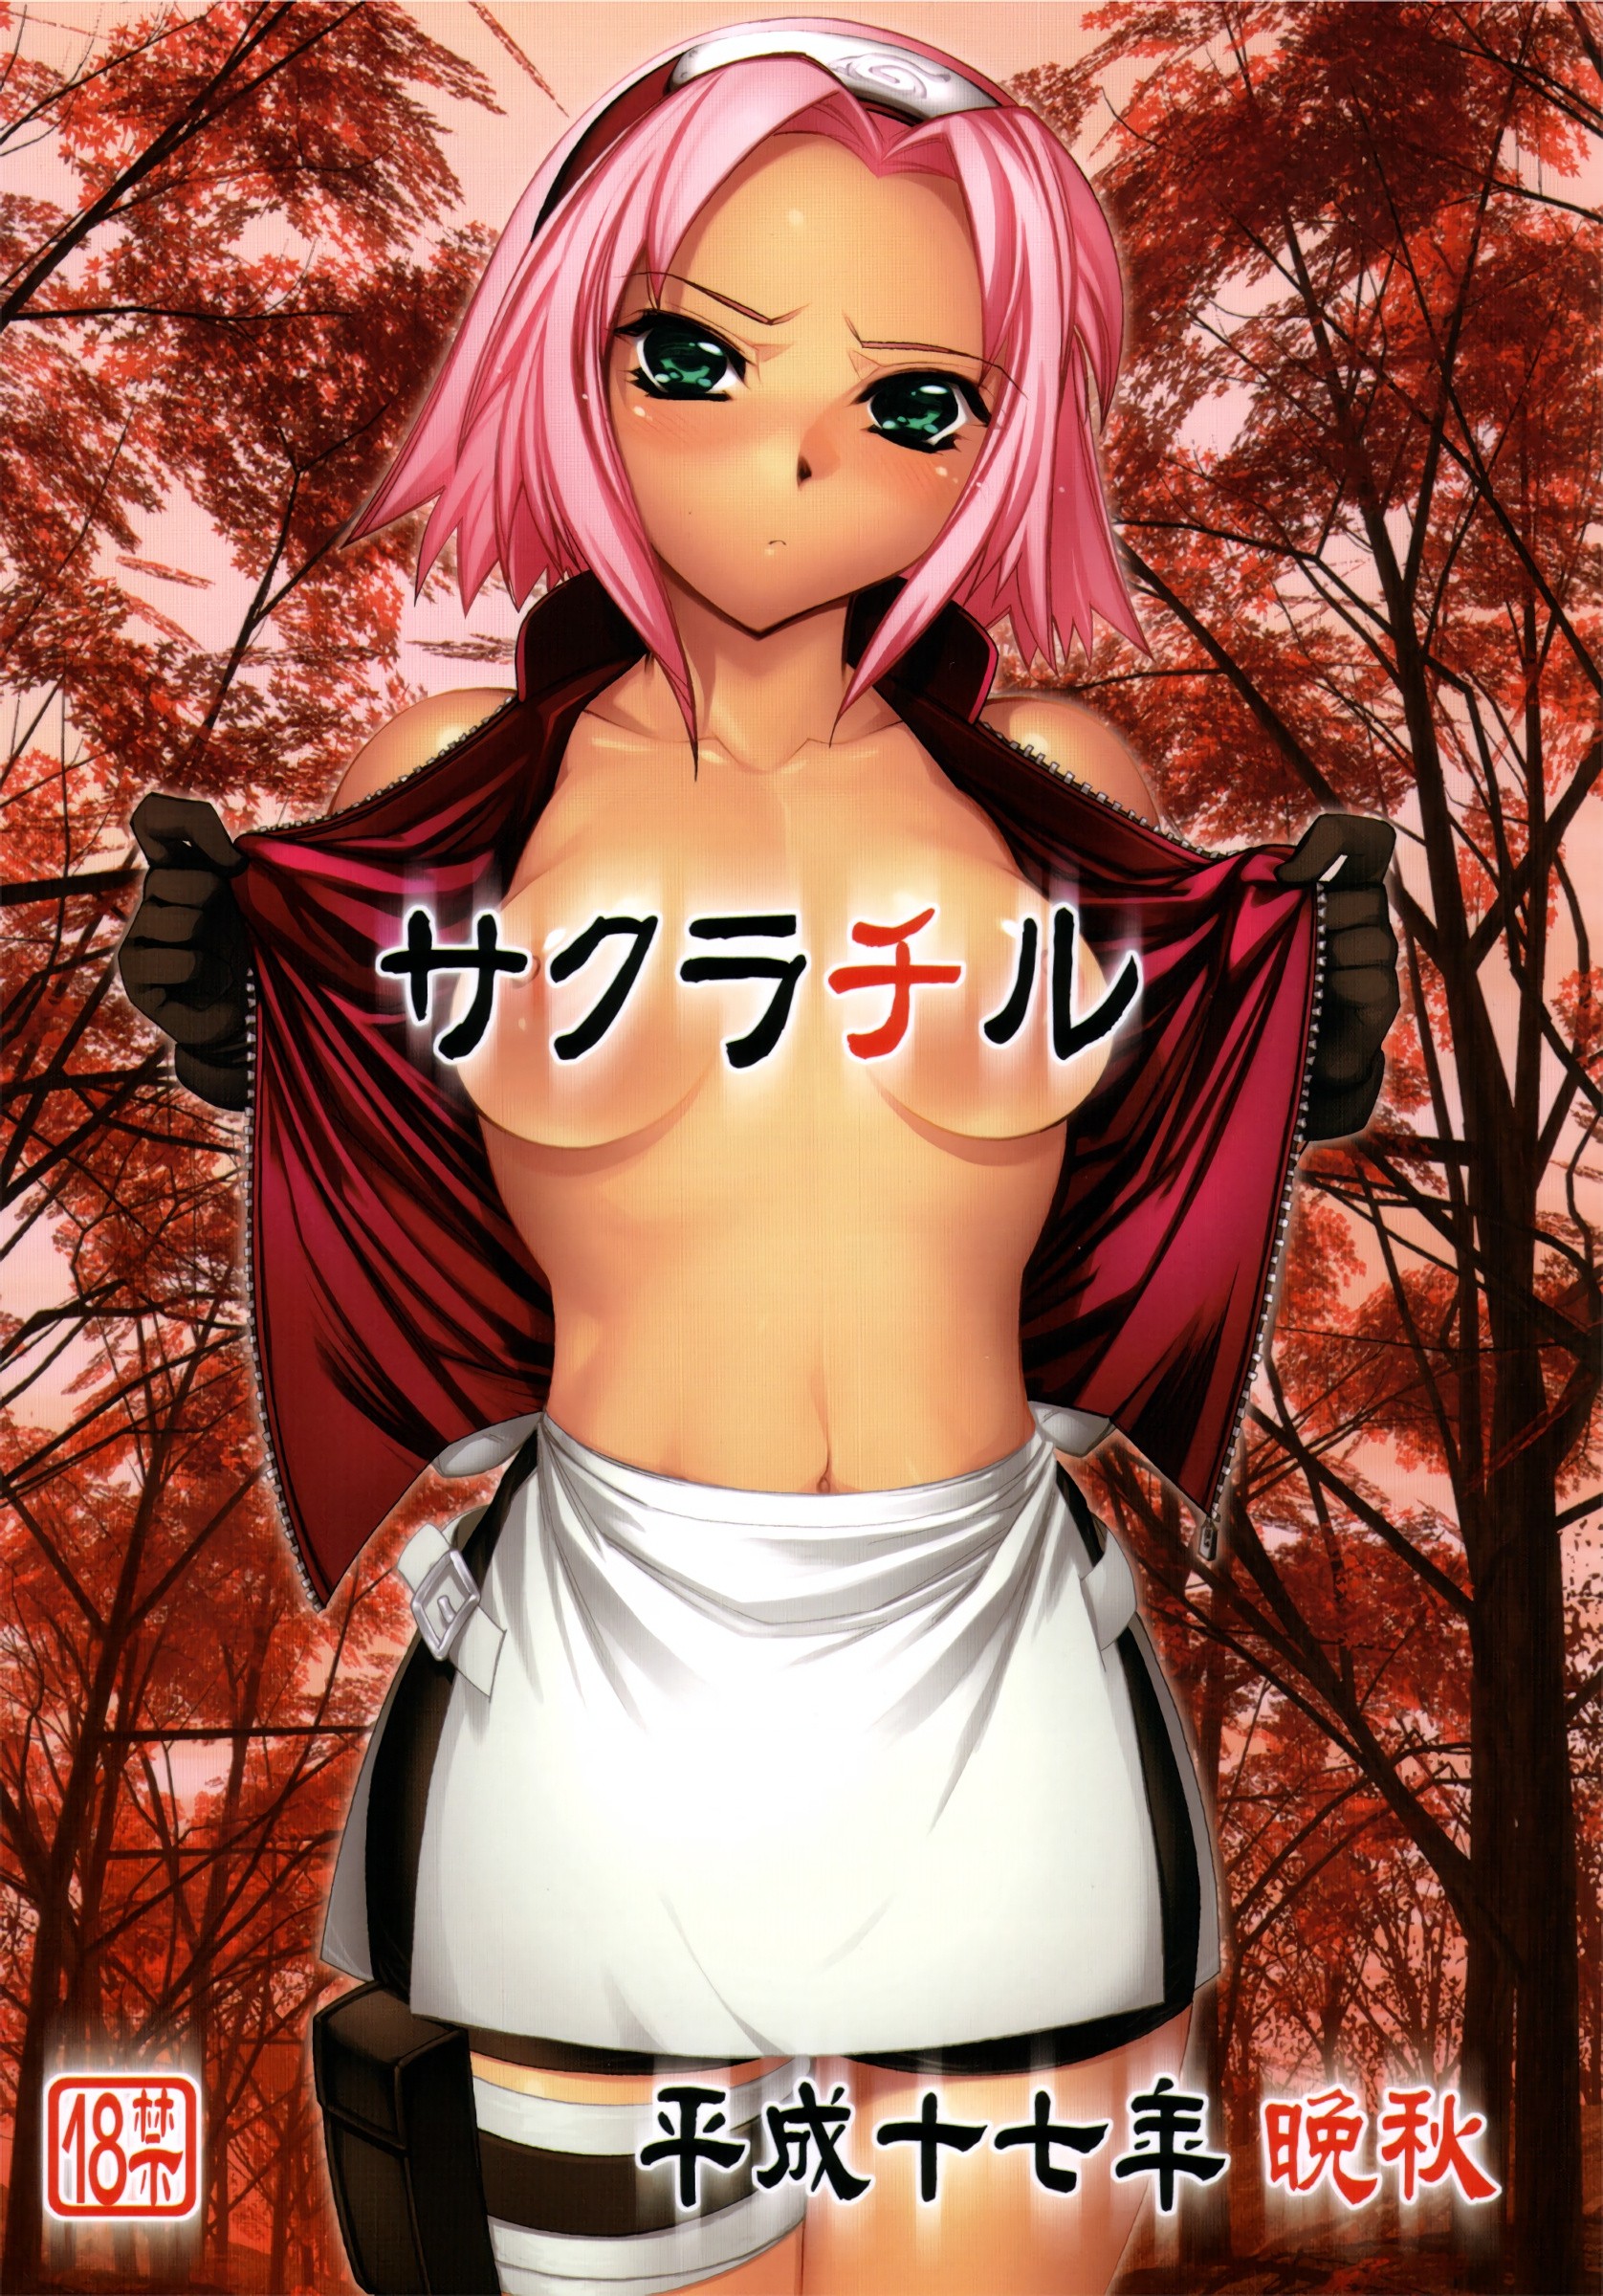 Sakura Chiru porn comic picture 1